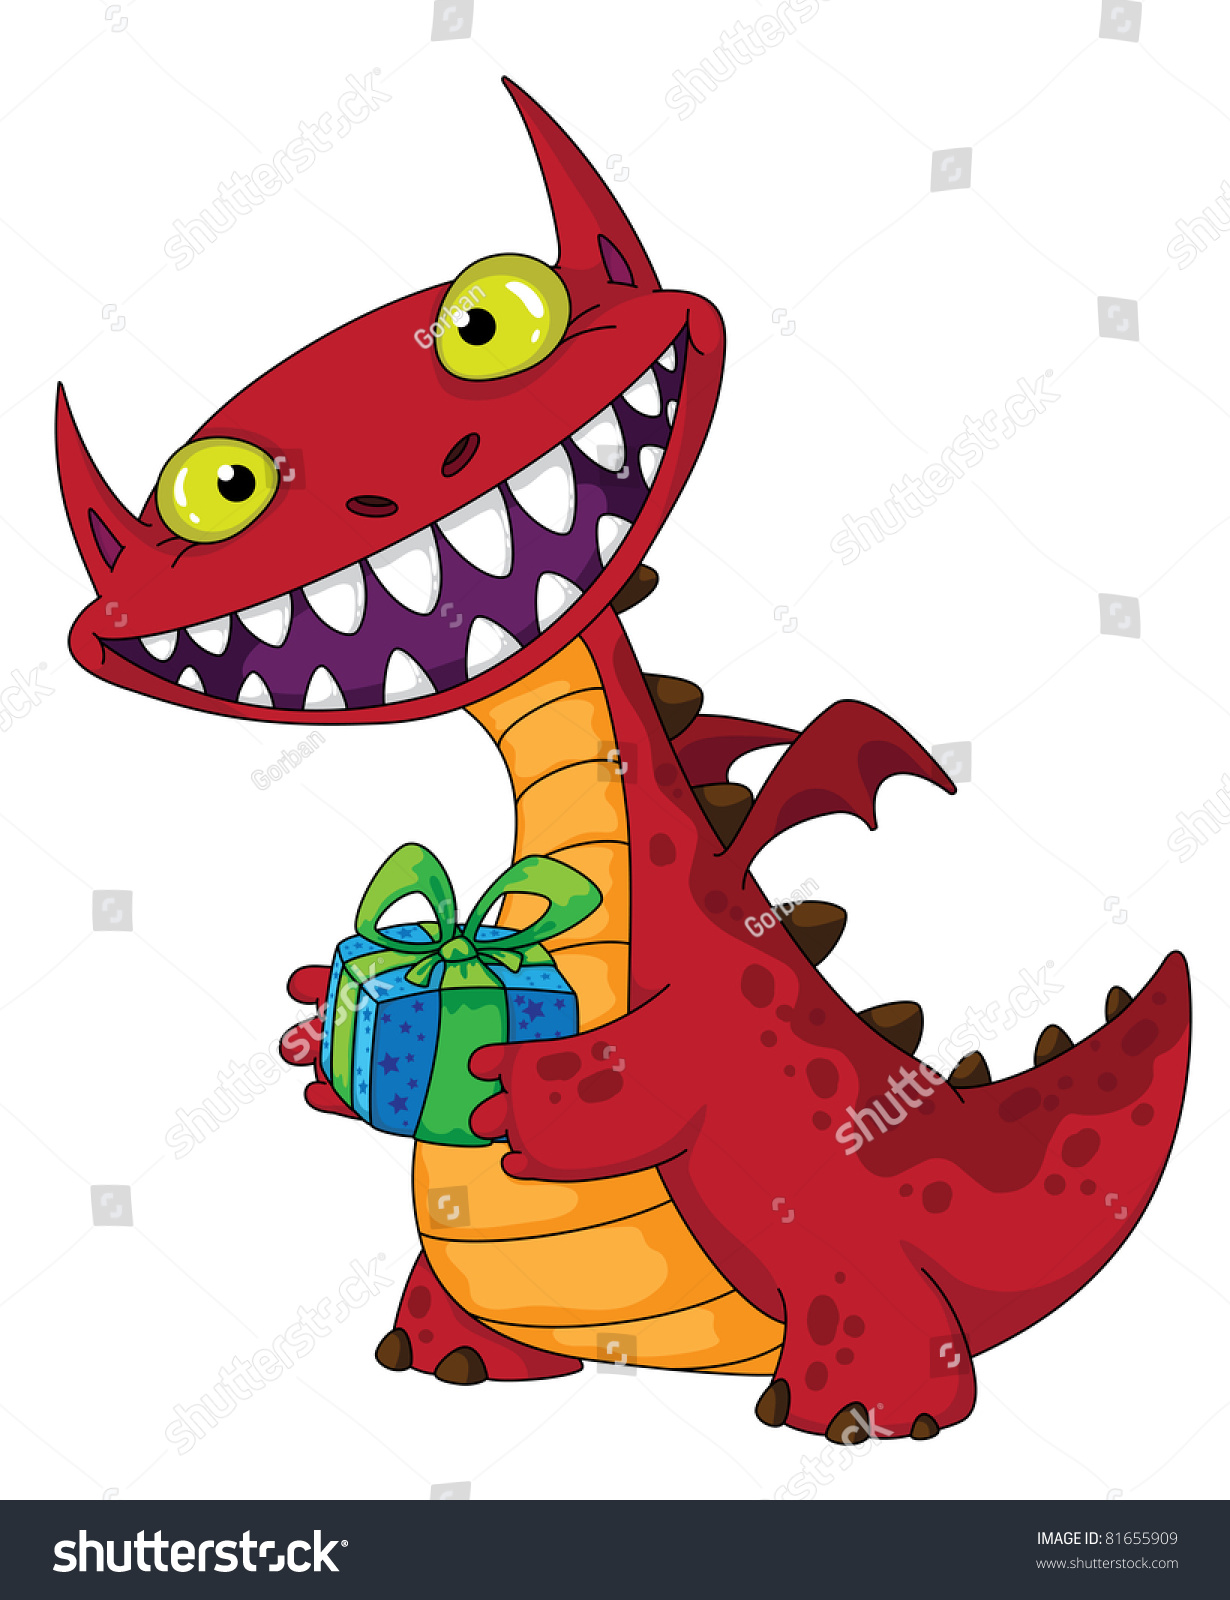 Illustration Laughing Dragon Gift Stock Vector 81655909 - Shutterstock